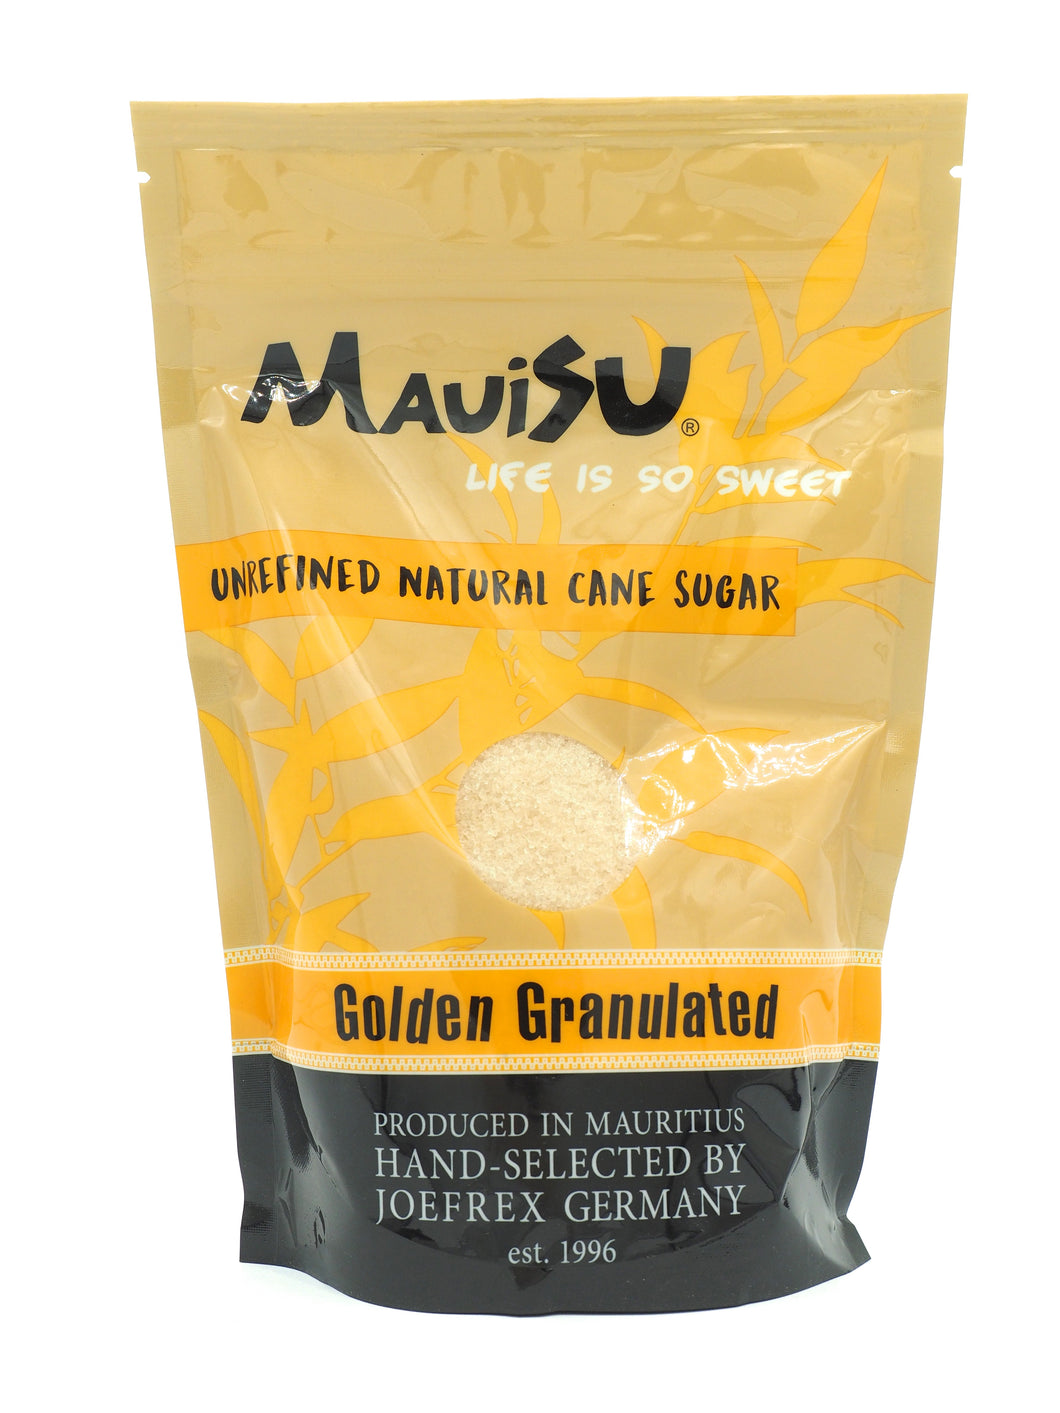 MAUISU GOLDEN GRANULATED, UNREFINED NATURAL CANE SUGAR